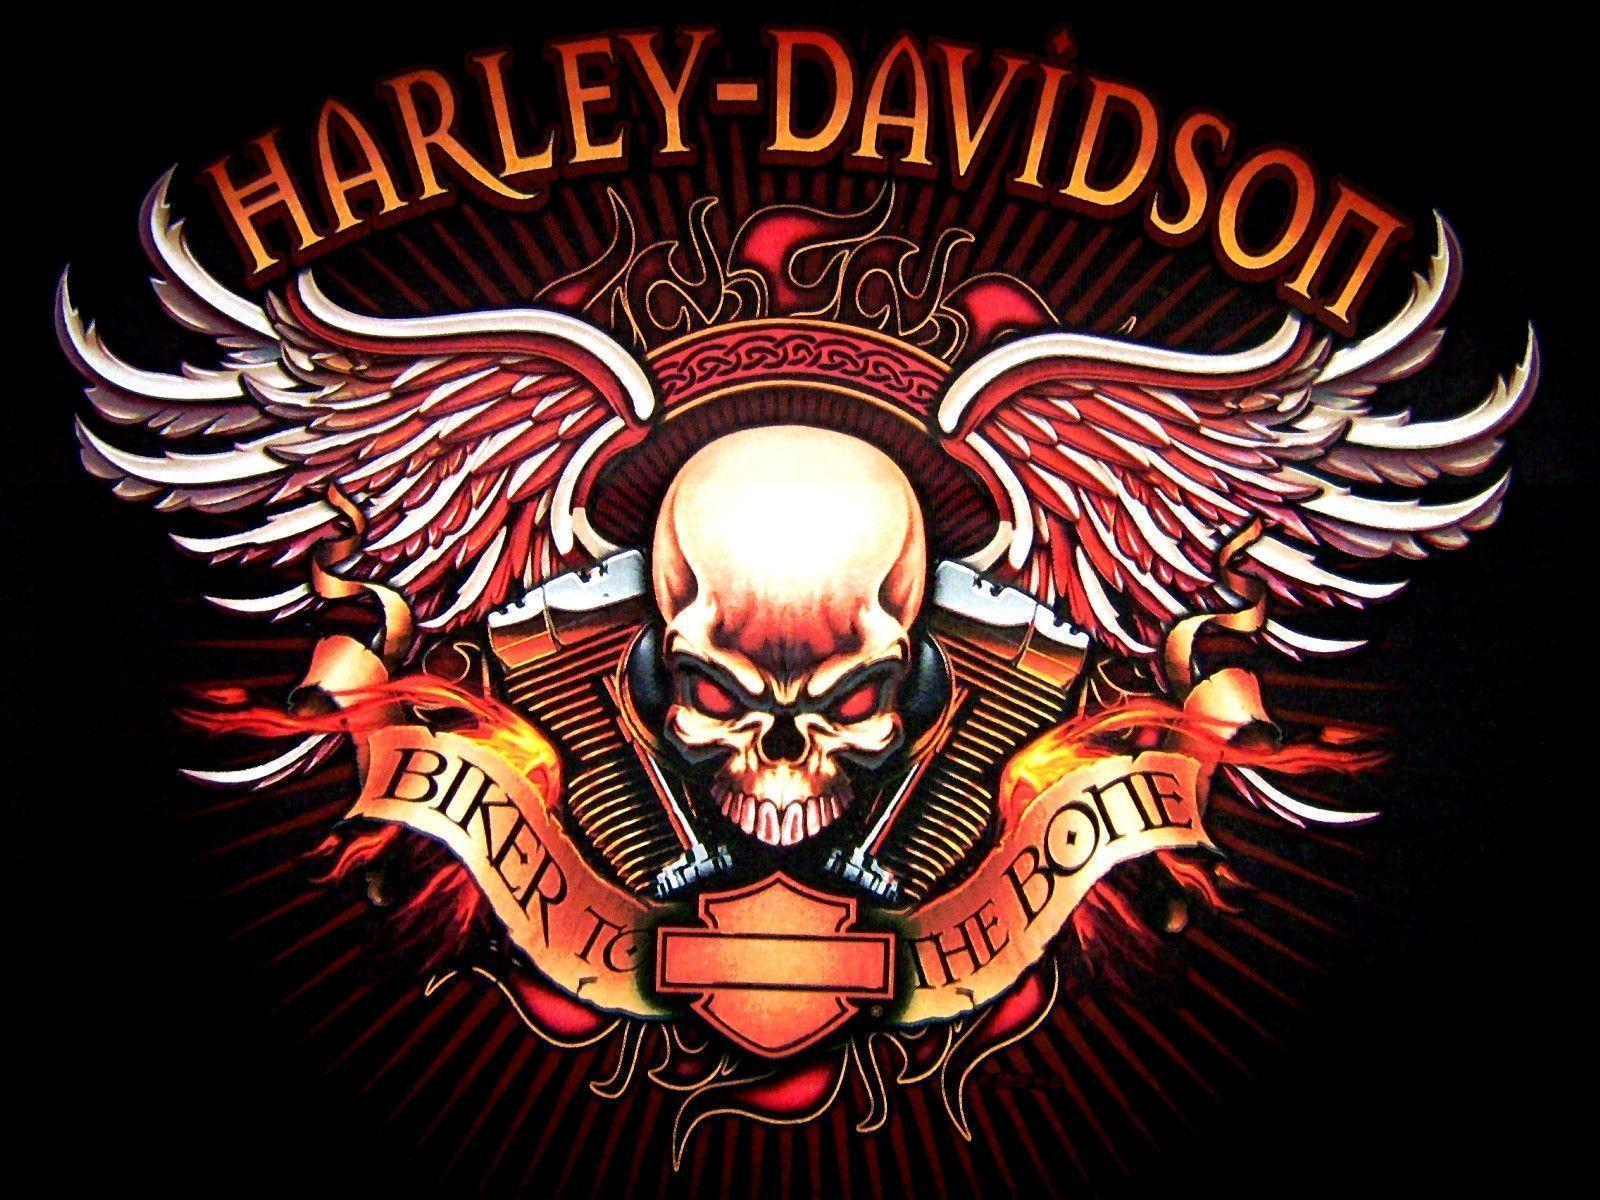 Harley Davidson Skull Logo With Flames 2015